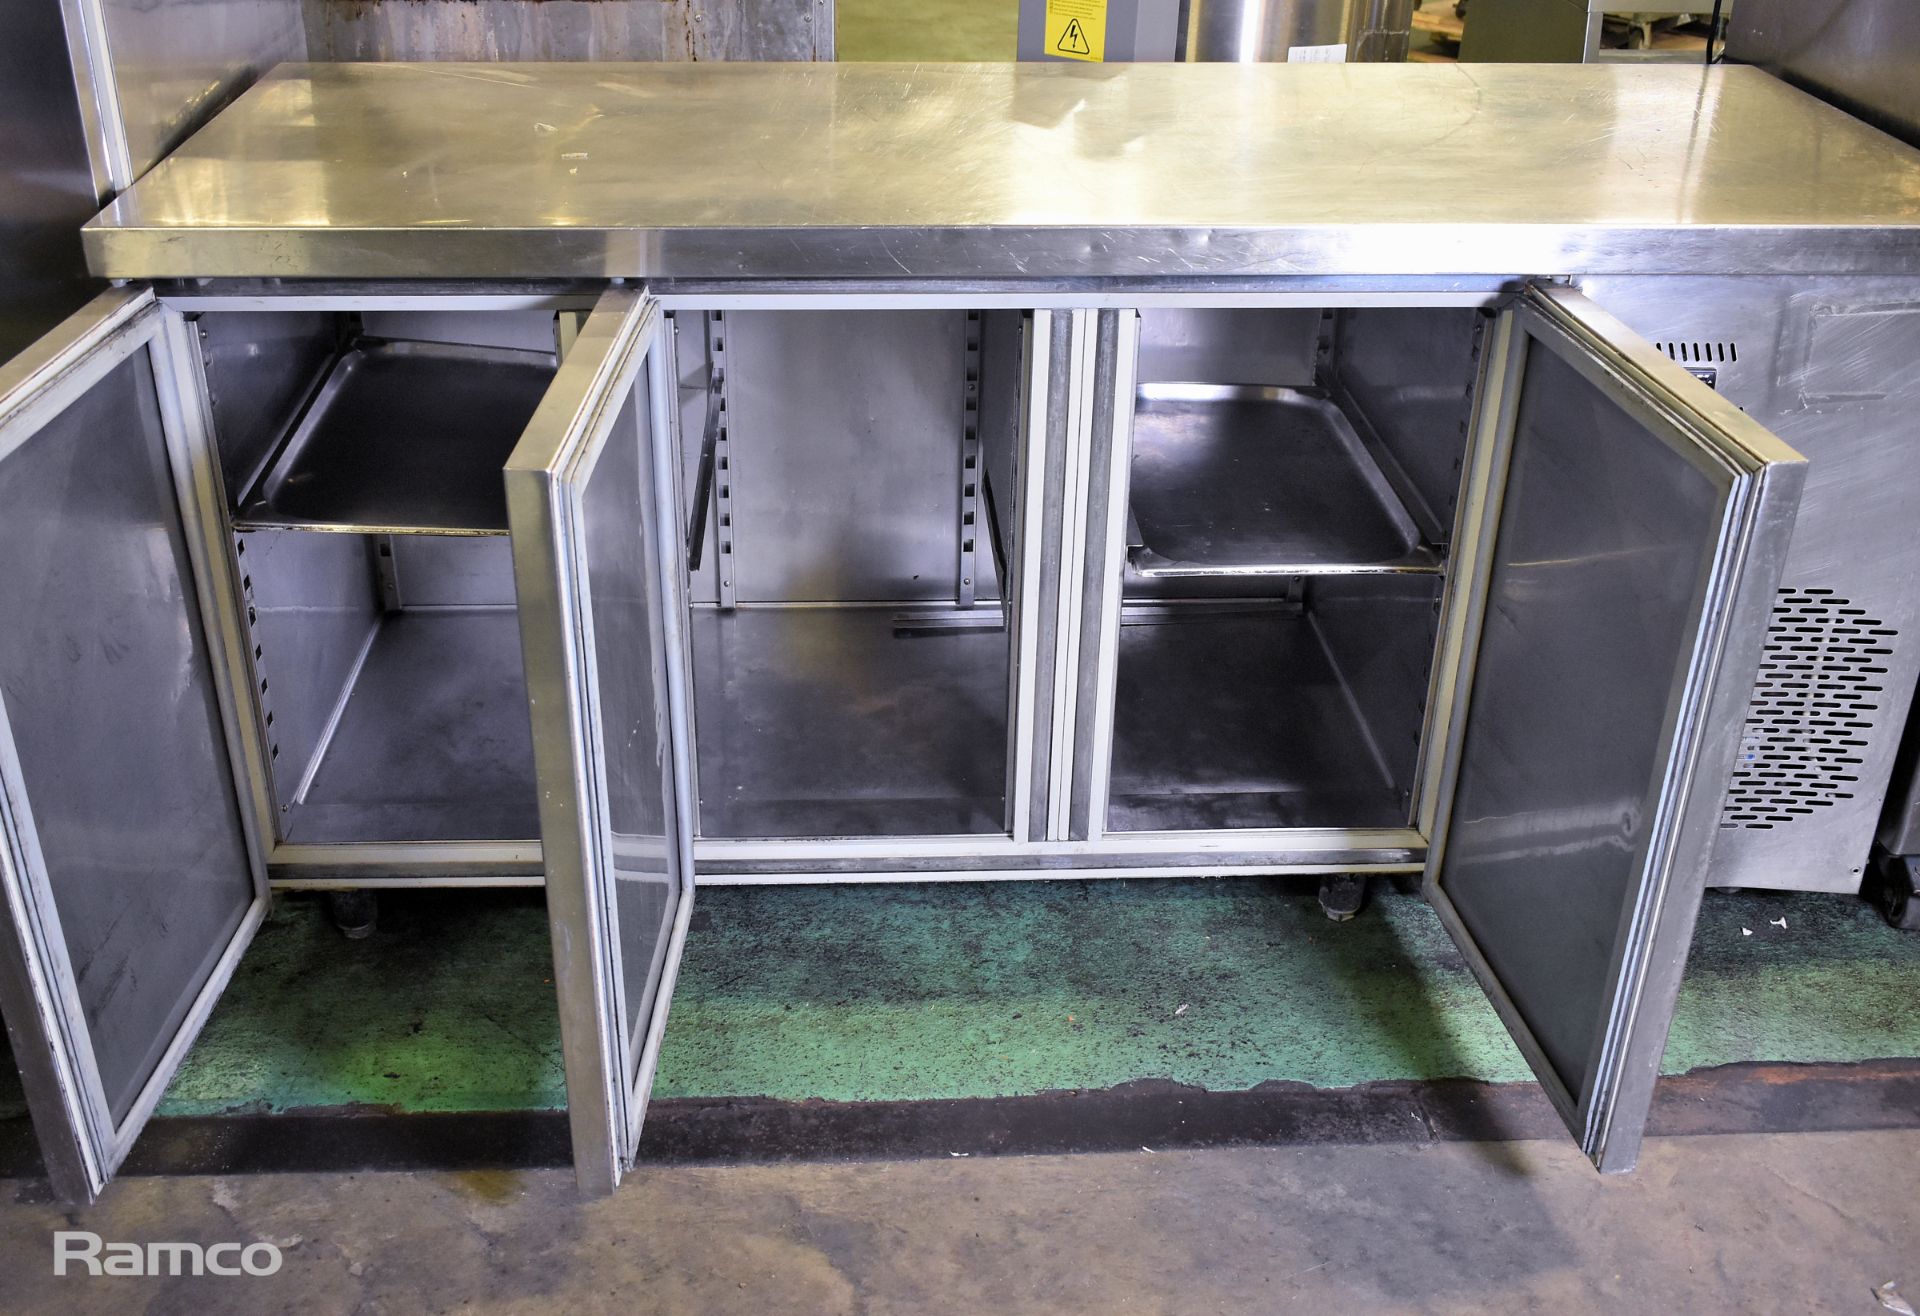 Inomak PN999/N stainless steel triple door counter fridge - W 1800 x D 700 x H 860mm - Image 2 of 5